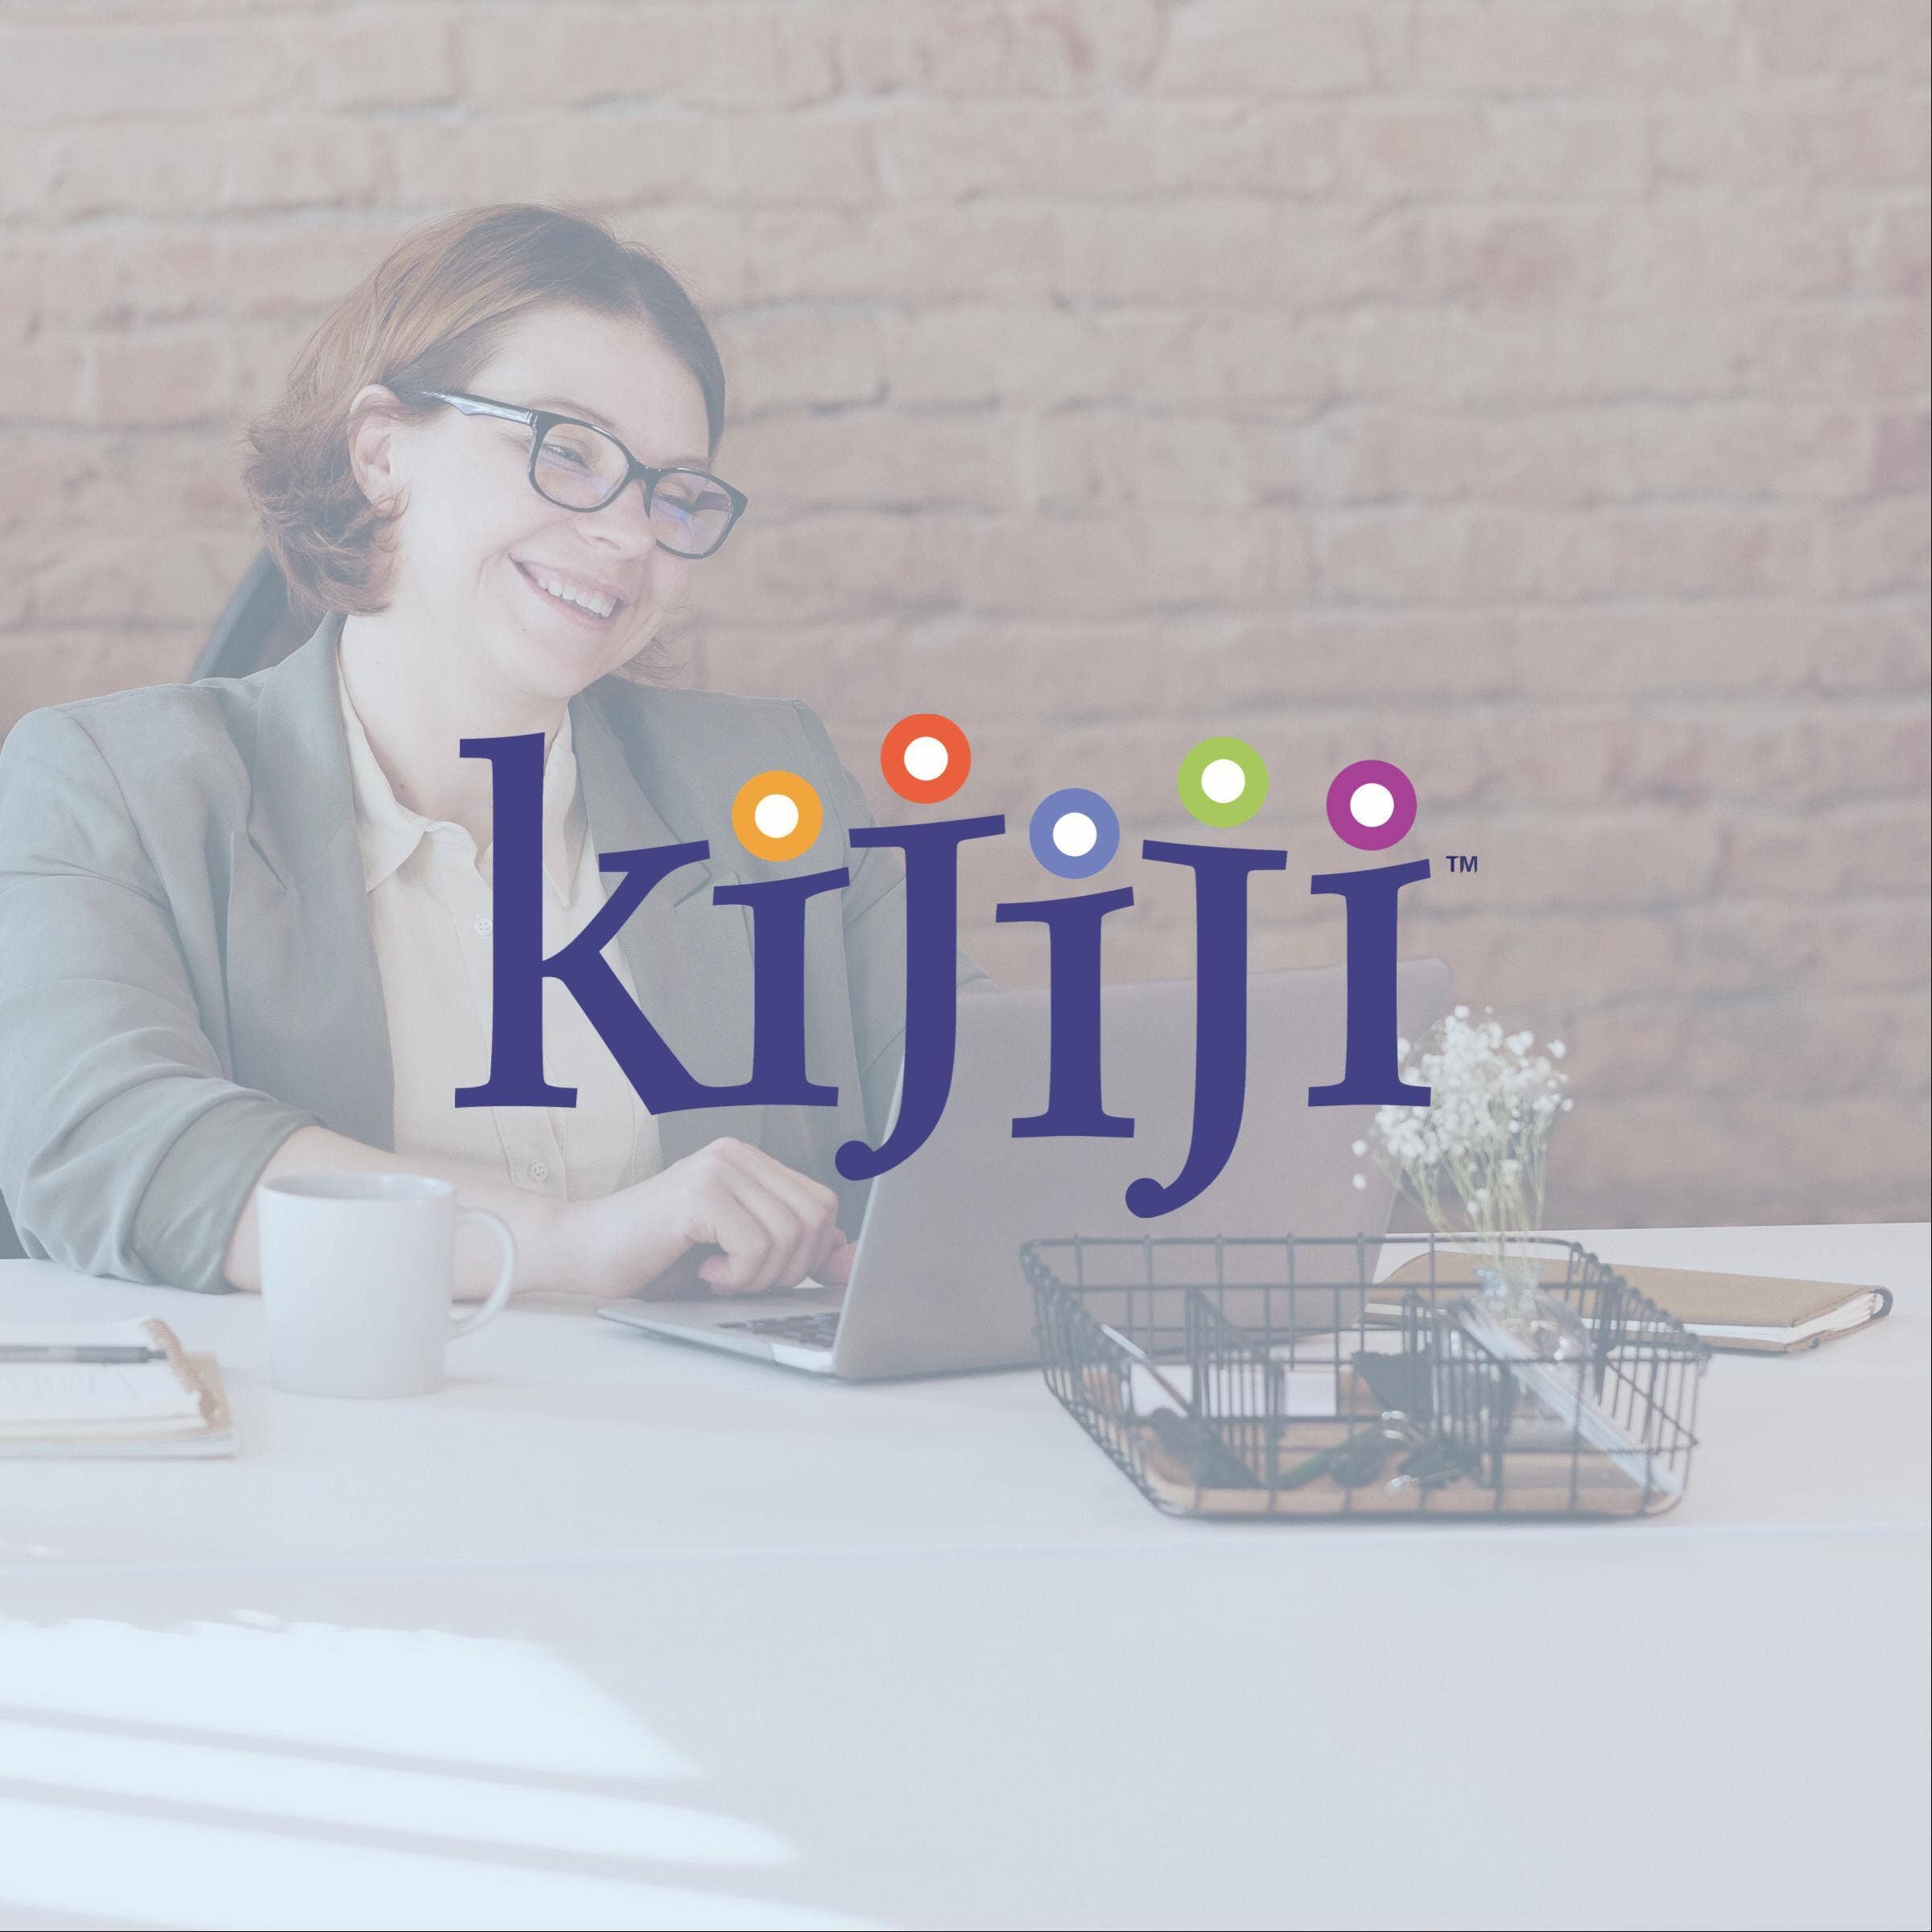 Kijiji part time jobs in calgary ideas